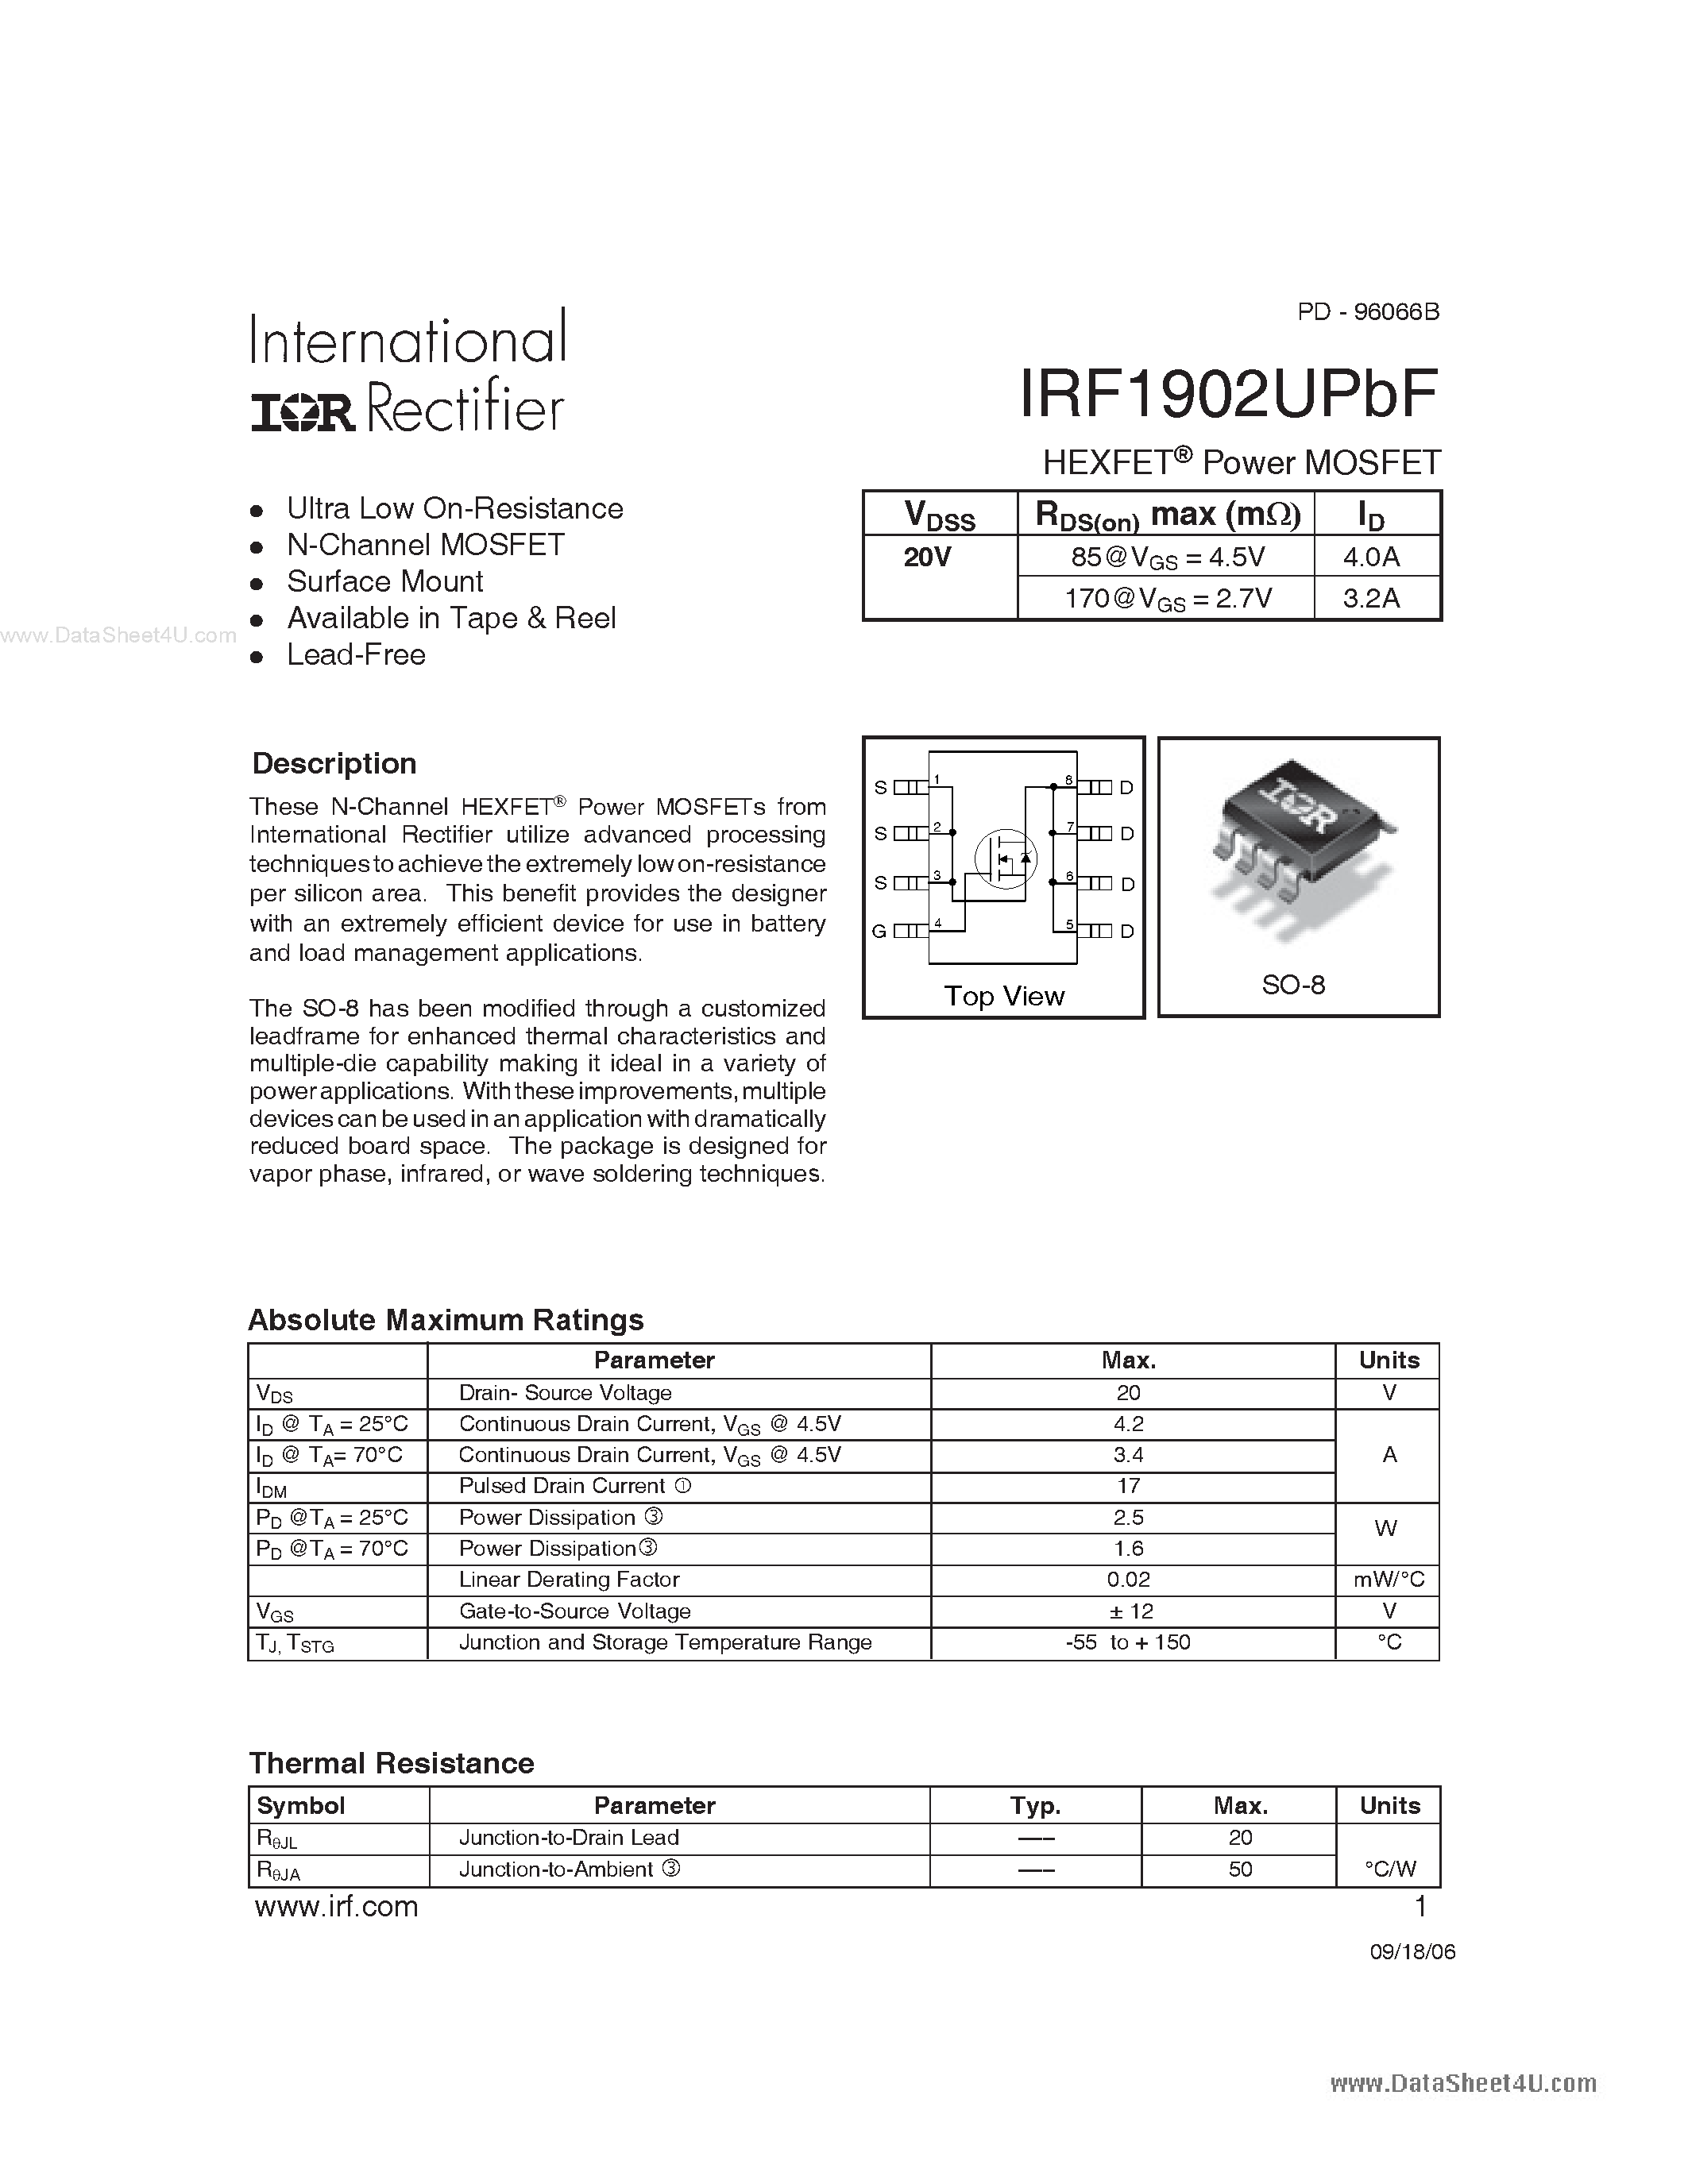 Даташит IRF1902UPBF - HEXFET Power MOSFET страница 1